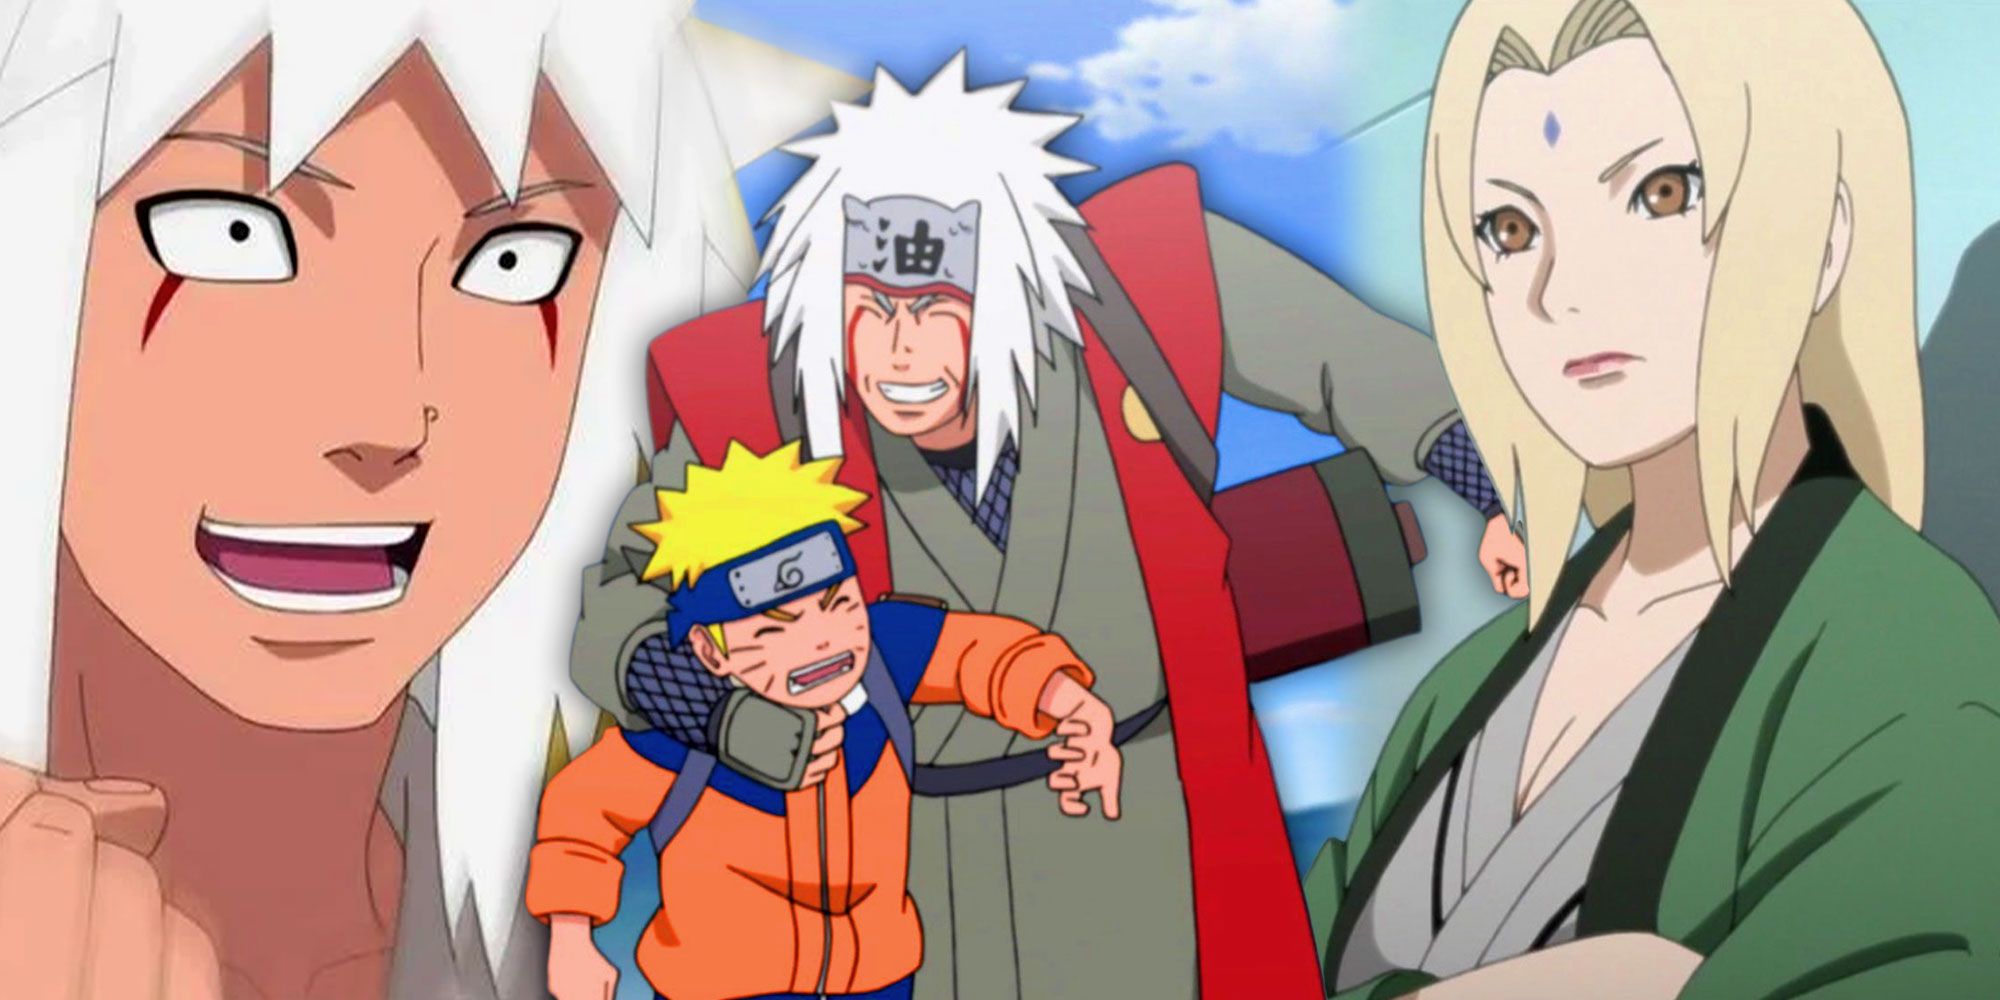 A blended image depicts a young Jiraiya alongside Jiraiya with his arm around Naruto, and Tsunade in the Naruto franchise